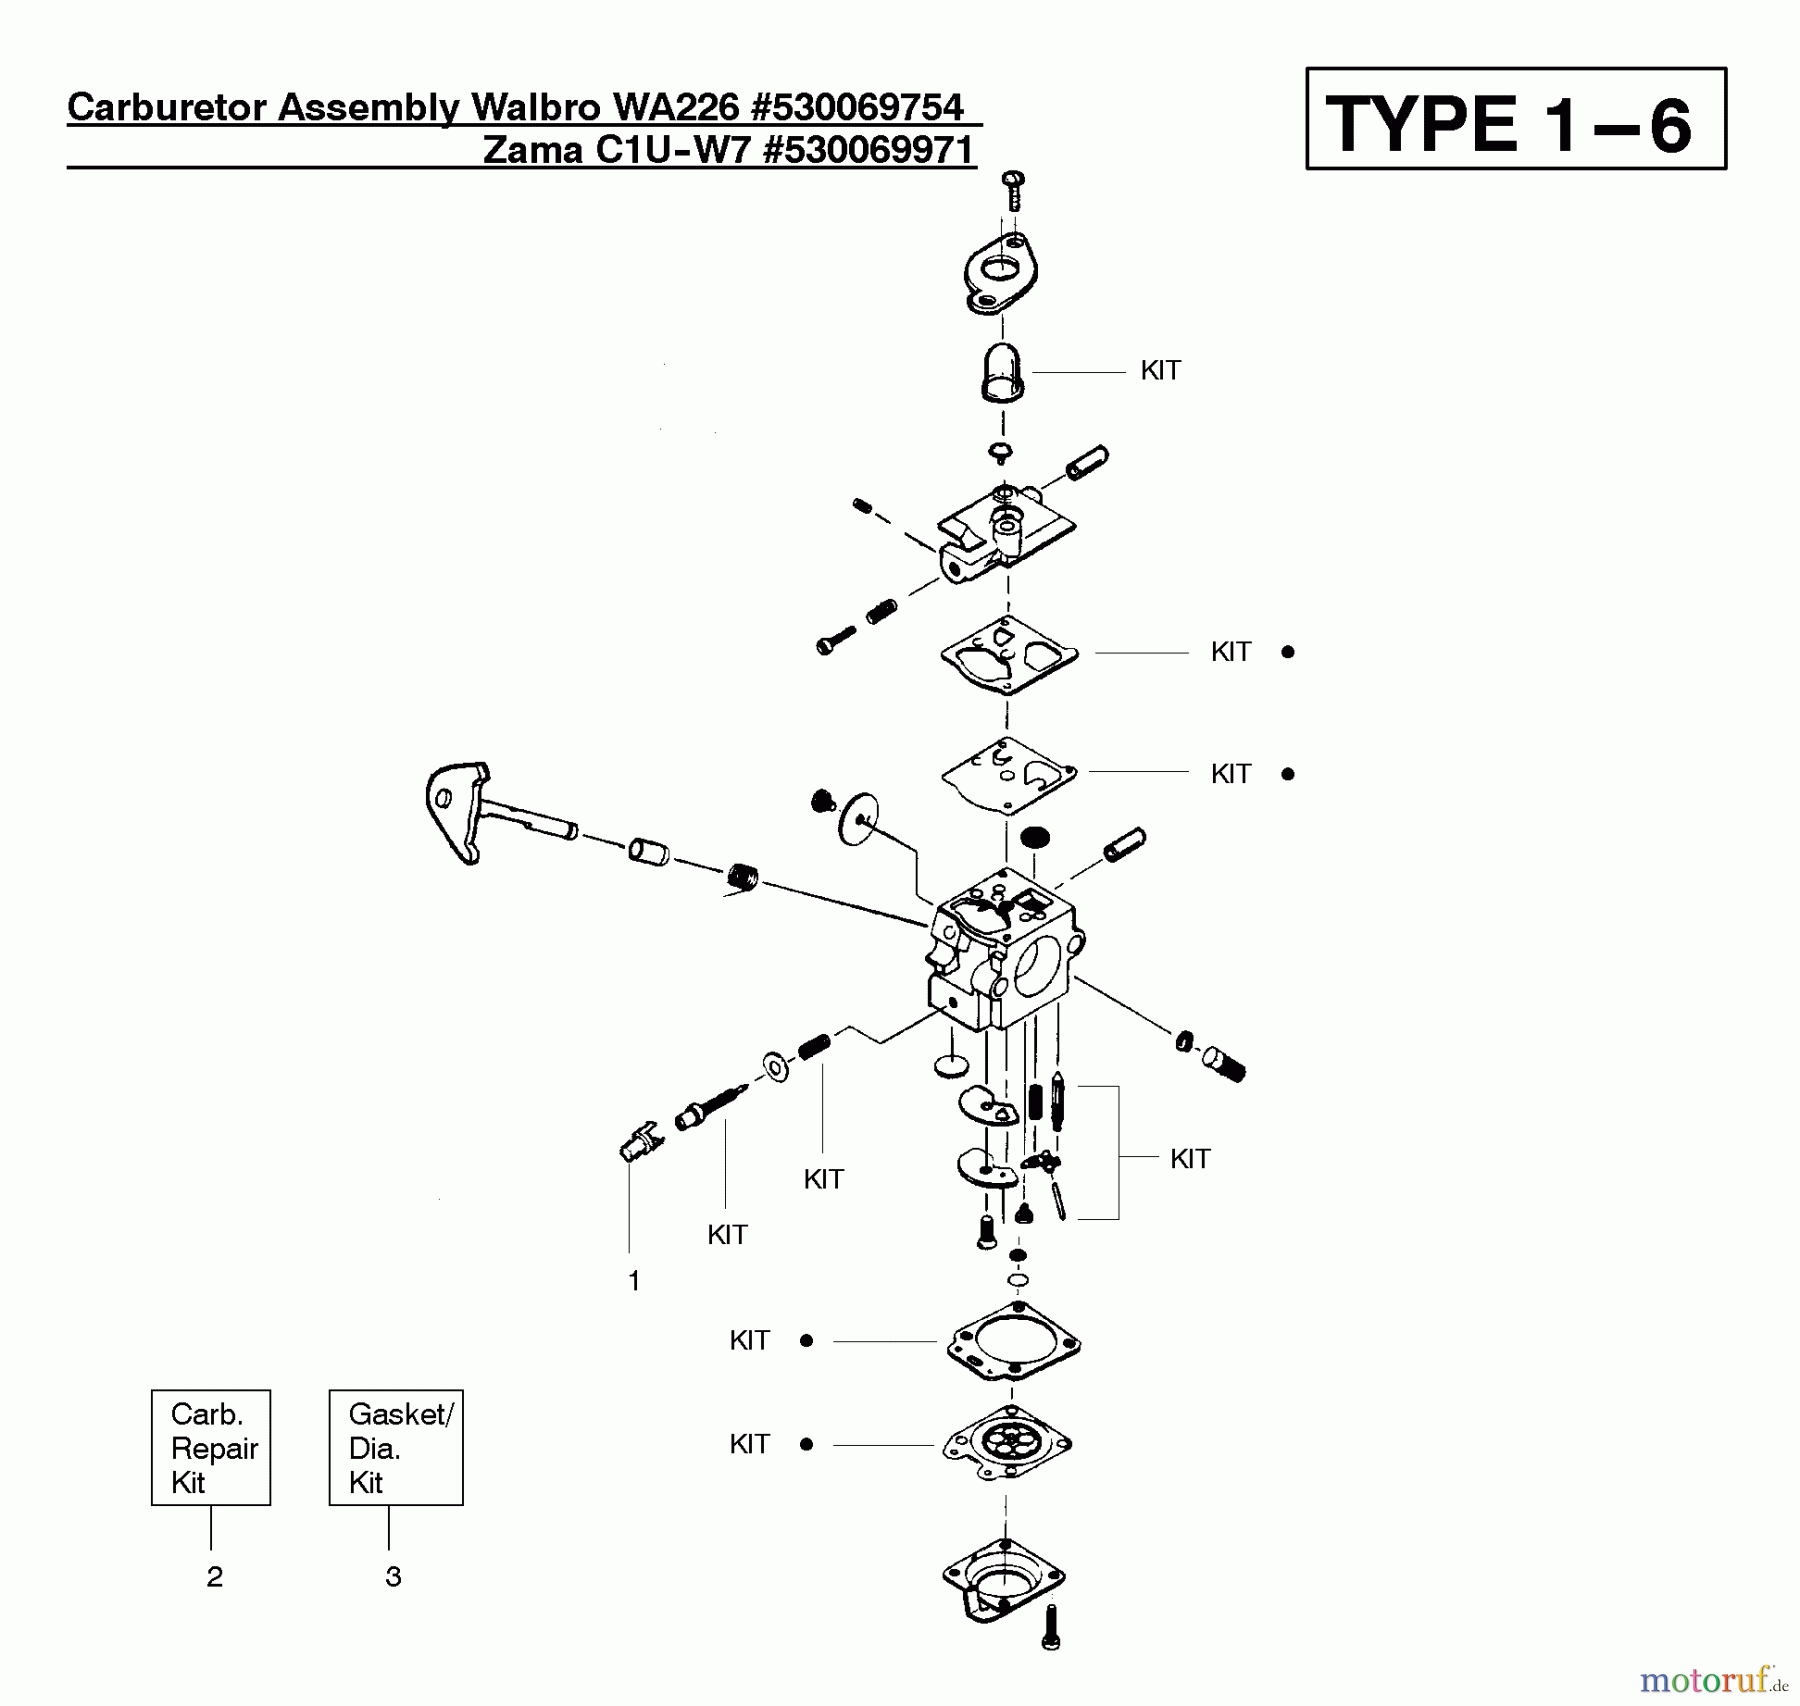  Poulan / Weed Eater Motorsensen, Trimmer XT600 (Type 5) - Weed Eater String Trimmer Carburetor Assembly (WT226) 530069754, (Zama C1U-W7) 530069971